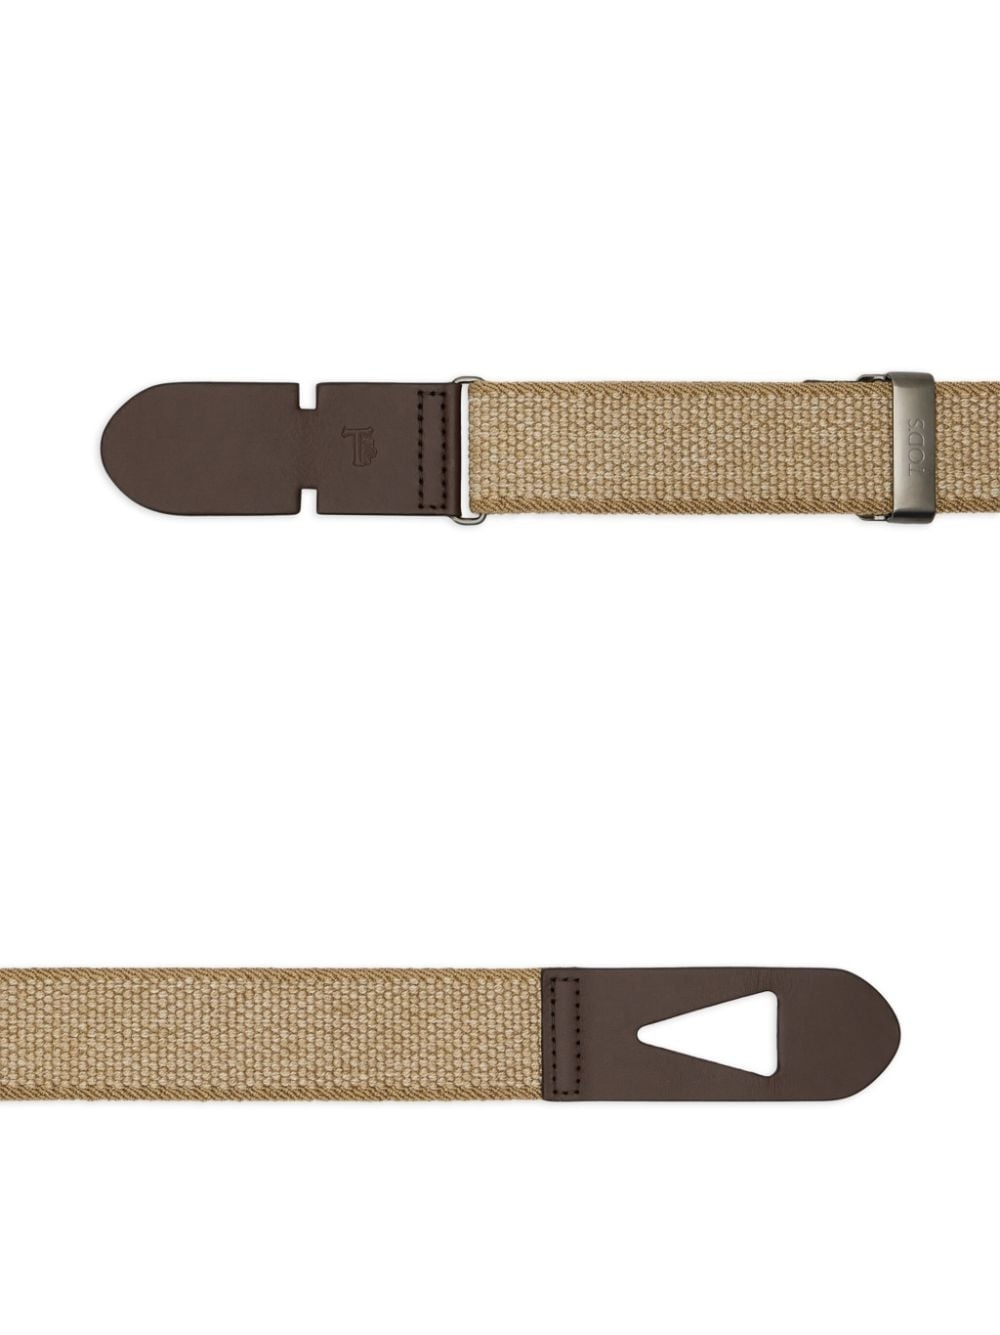 New Greca 3.5 buckle belt - 2